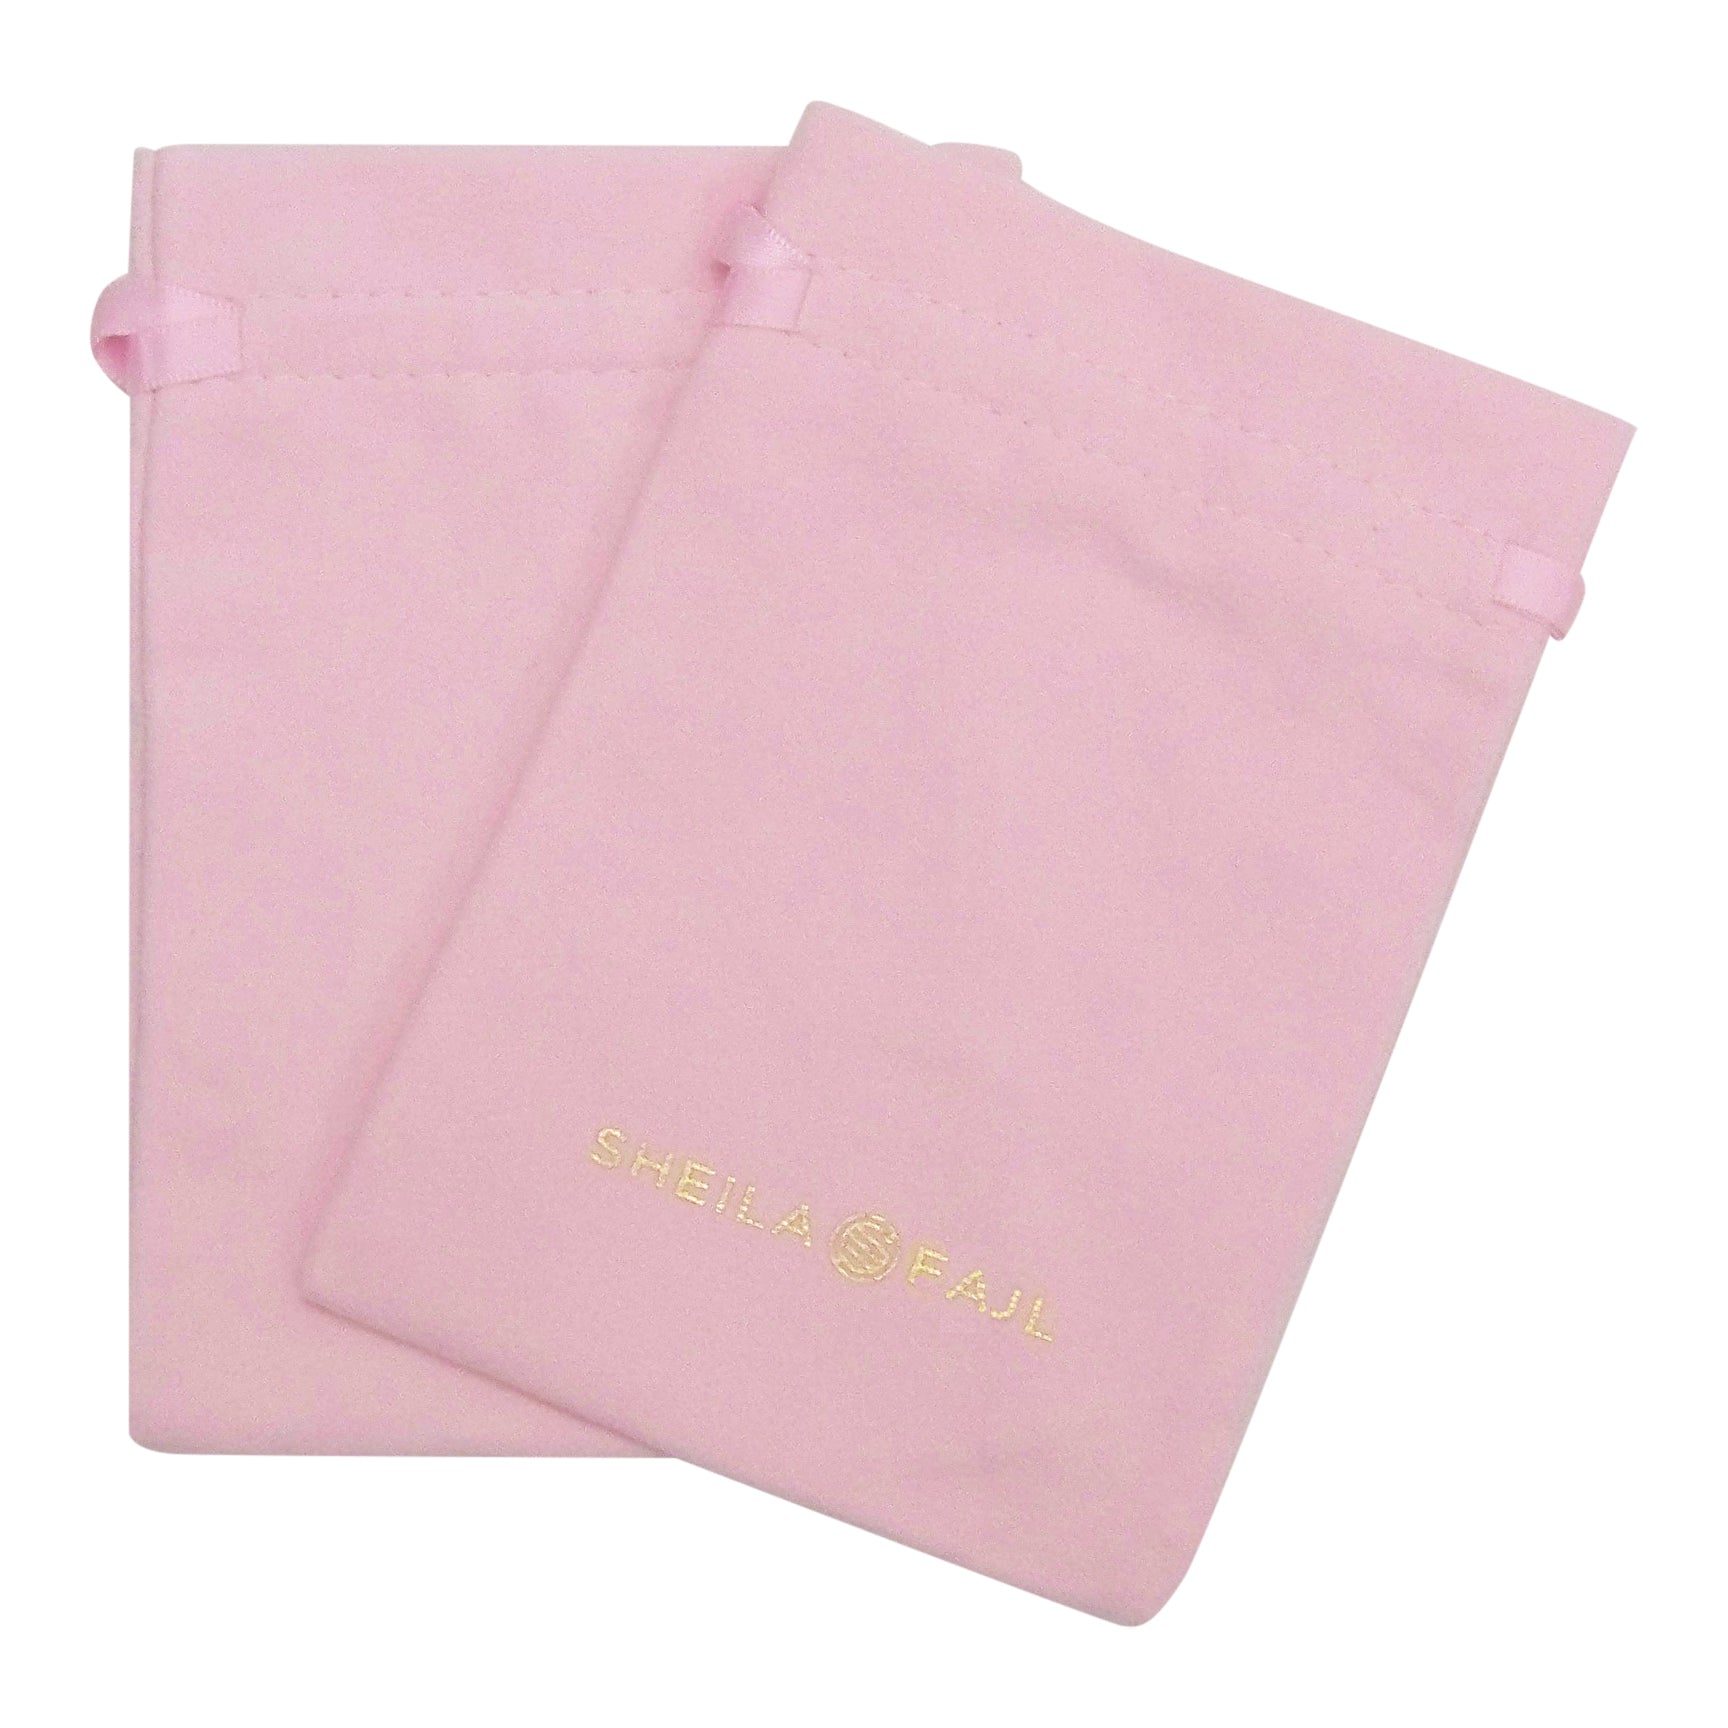 Sheila Fajl pink jewelry Bags